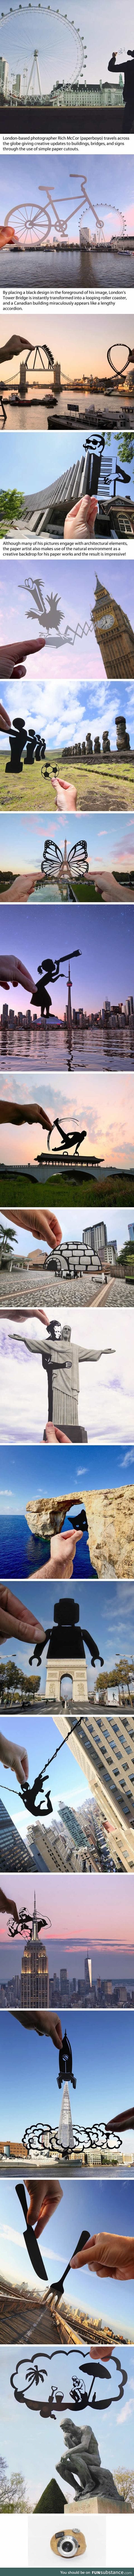 Paper cutouts transform landmarks around the world into scenes of temporary amusement